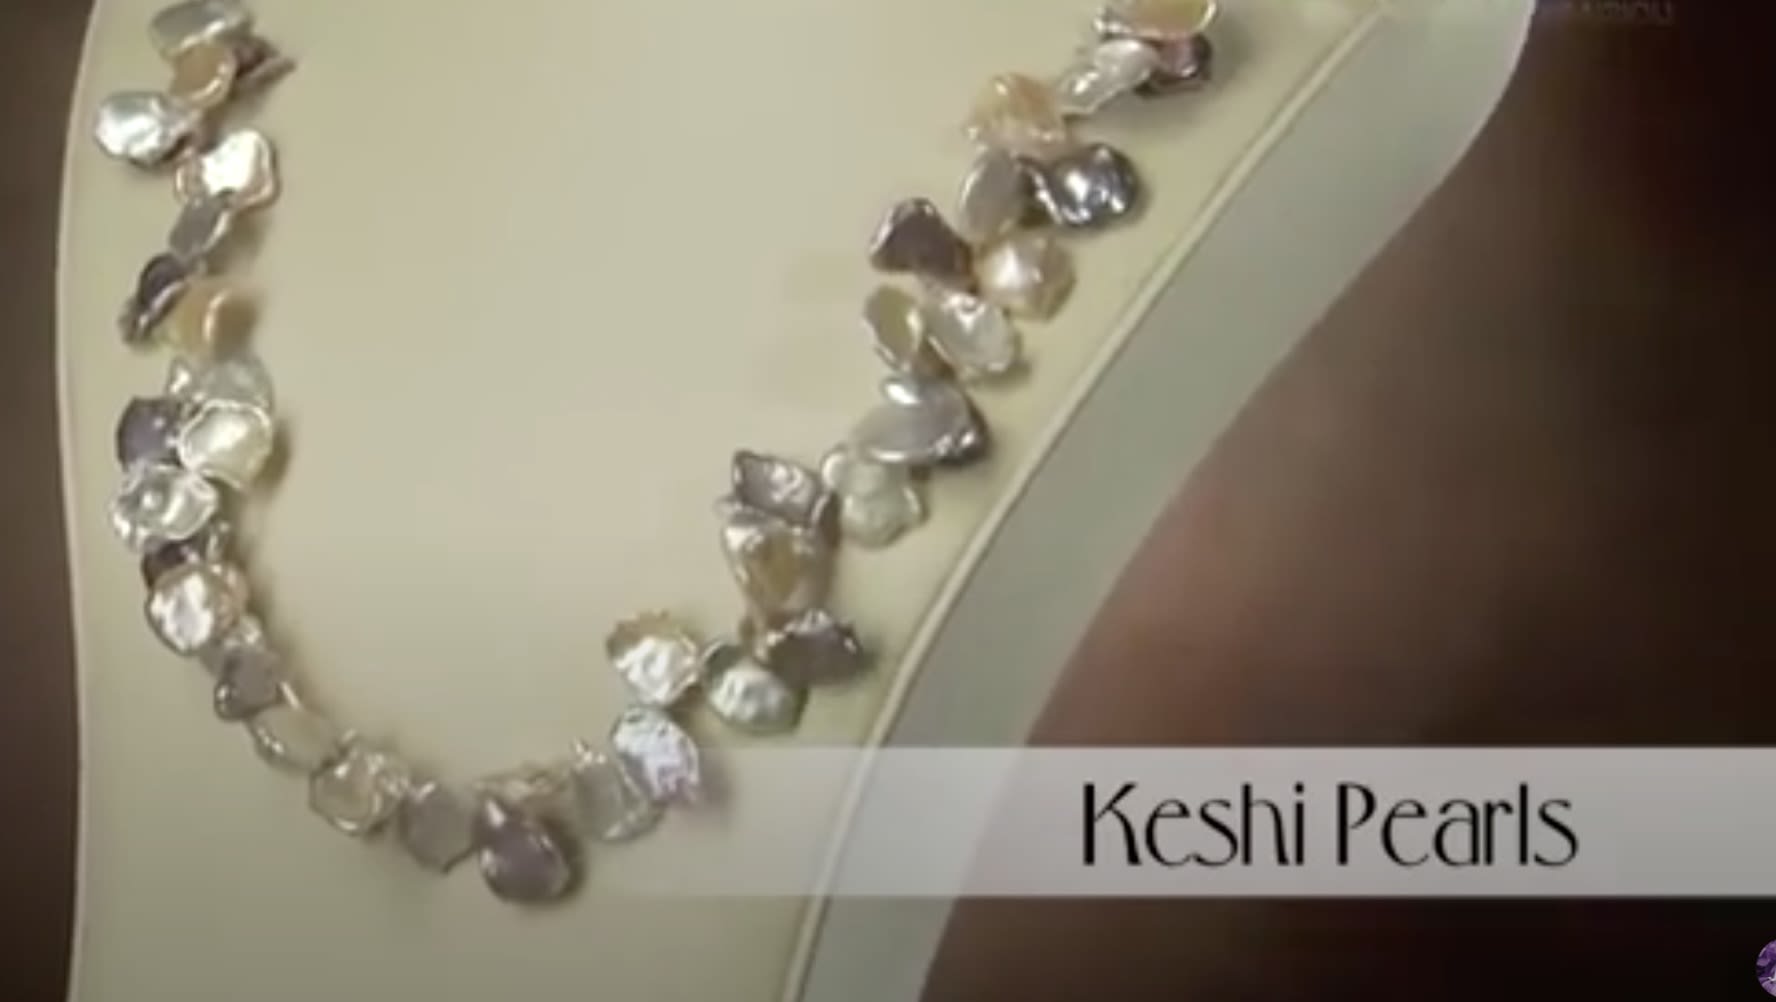 https://media.gemstones.com/image/upload/q_auto,f_auto/v1628084461/gemstones-site/video/What-Are-Keshi-Pearls.jpg